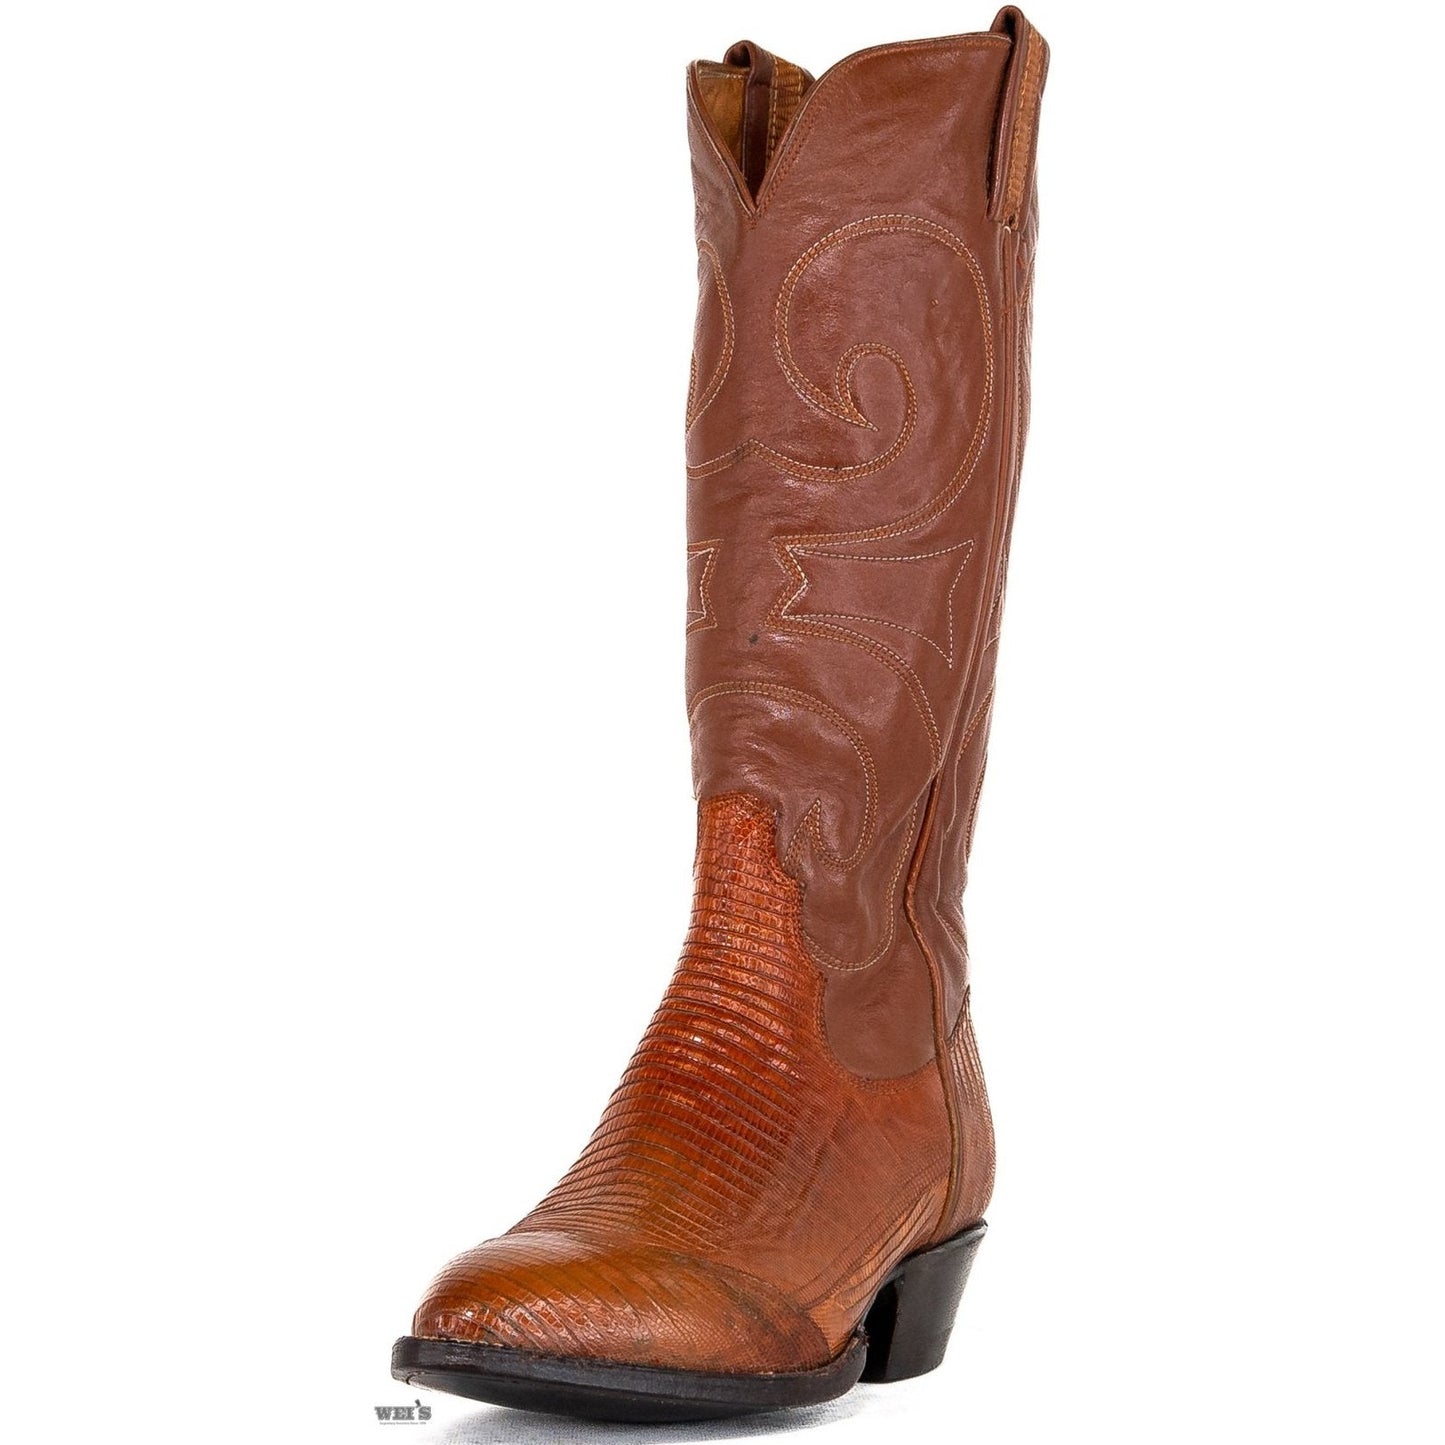 Panhandle Slim Men's Cowboy Boots 13" Exotic Lizard Cowboy Heel R Toe 1V58